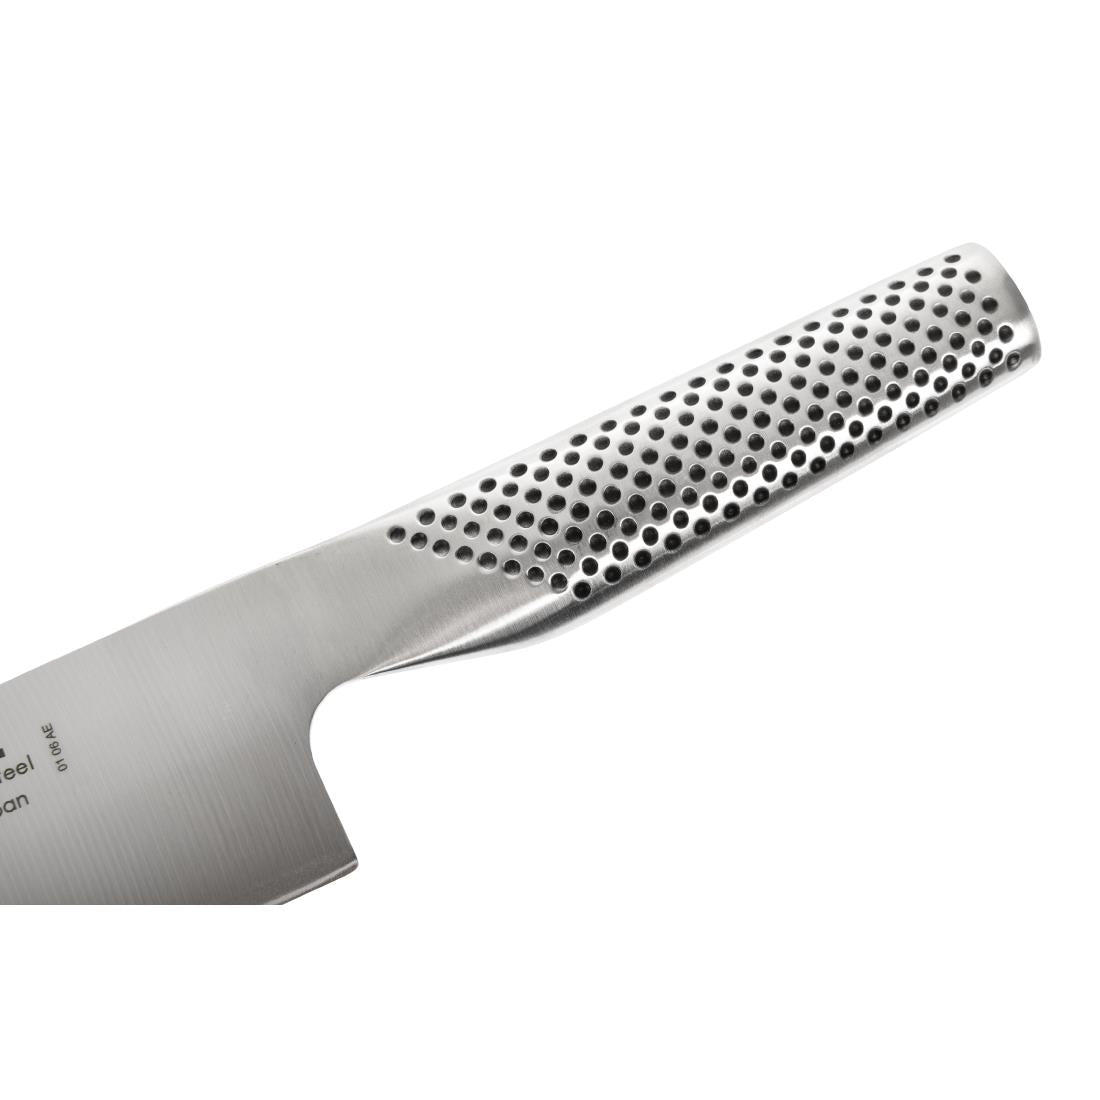 Global G 2 Chef Knife 20.5cm JD Catering Equipment Solutions Ltd